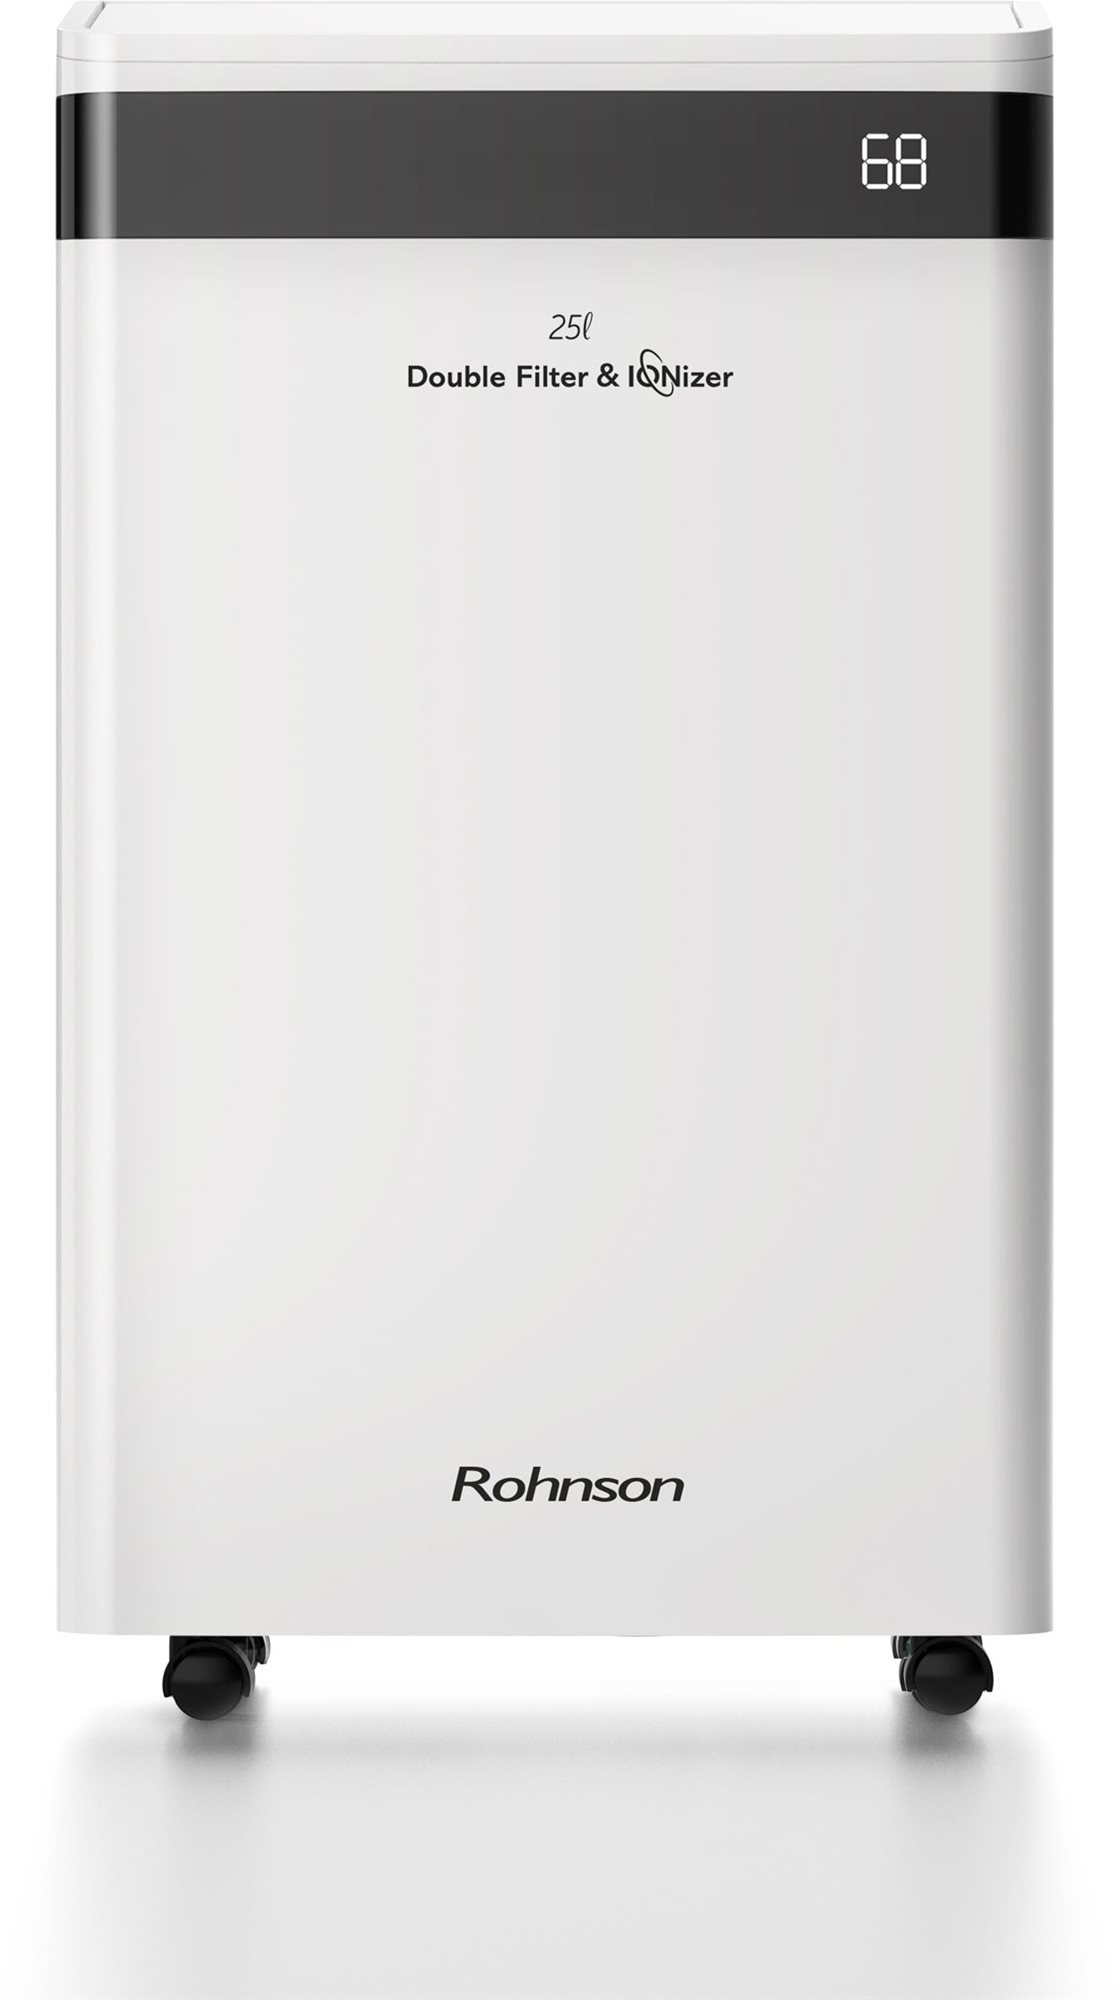 Rohnson R-91125 Double Filter & Ionizer+ kiterjesztett 5 éves garancia